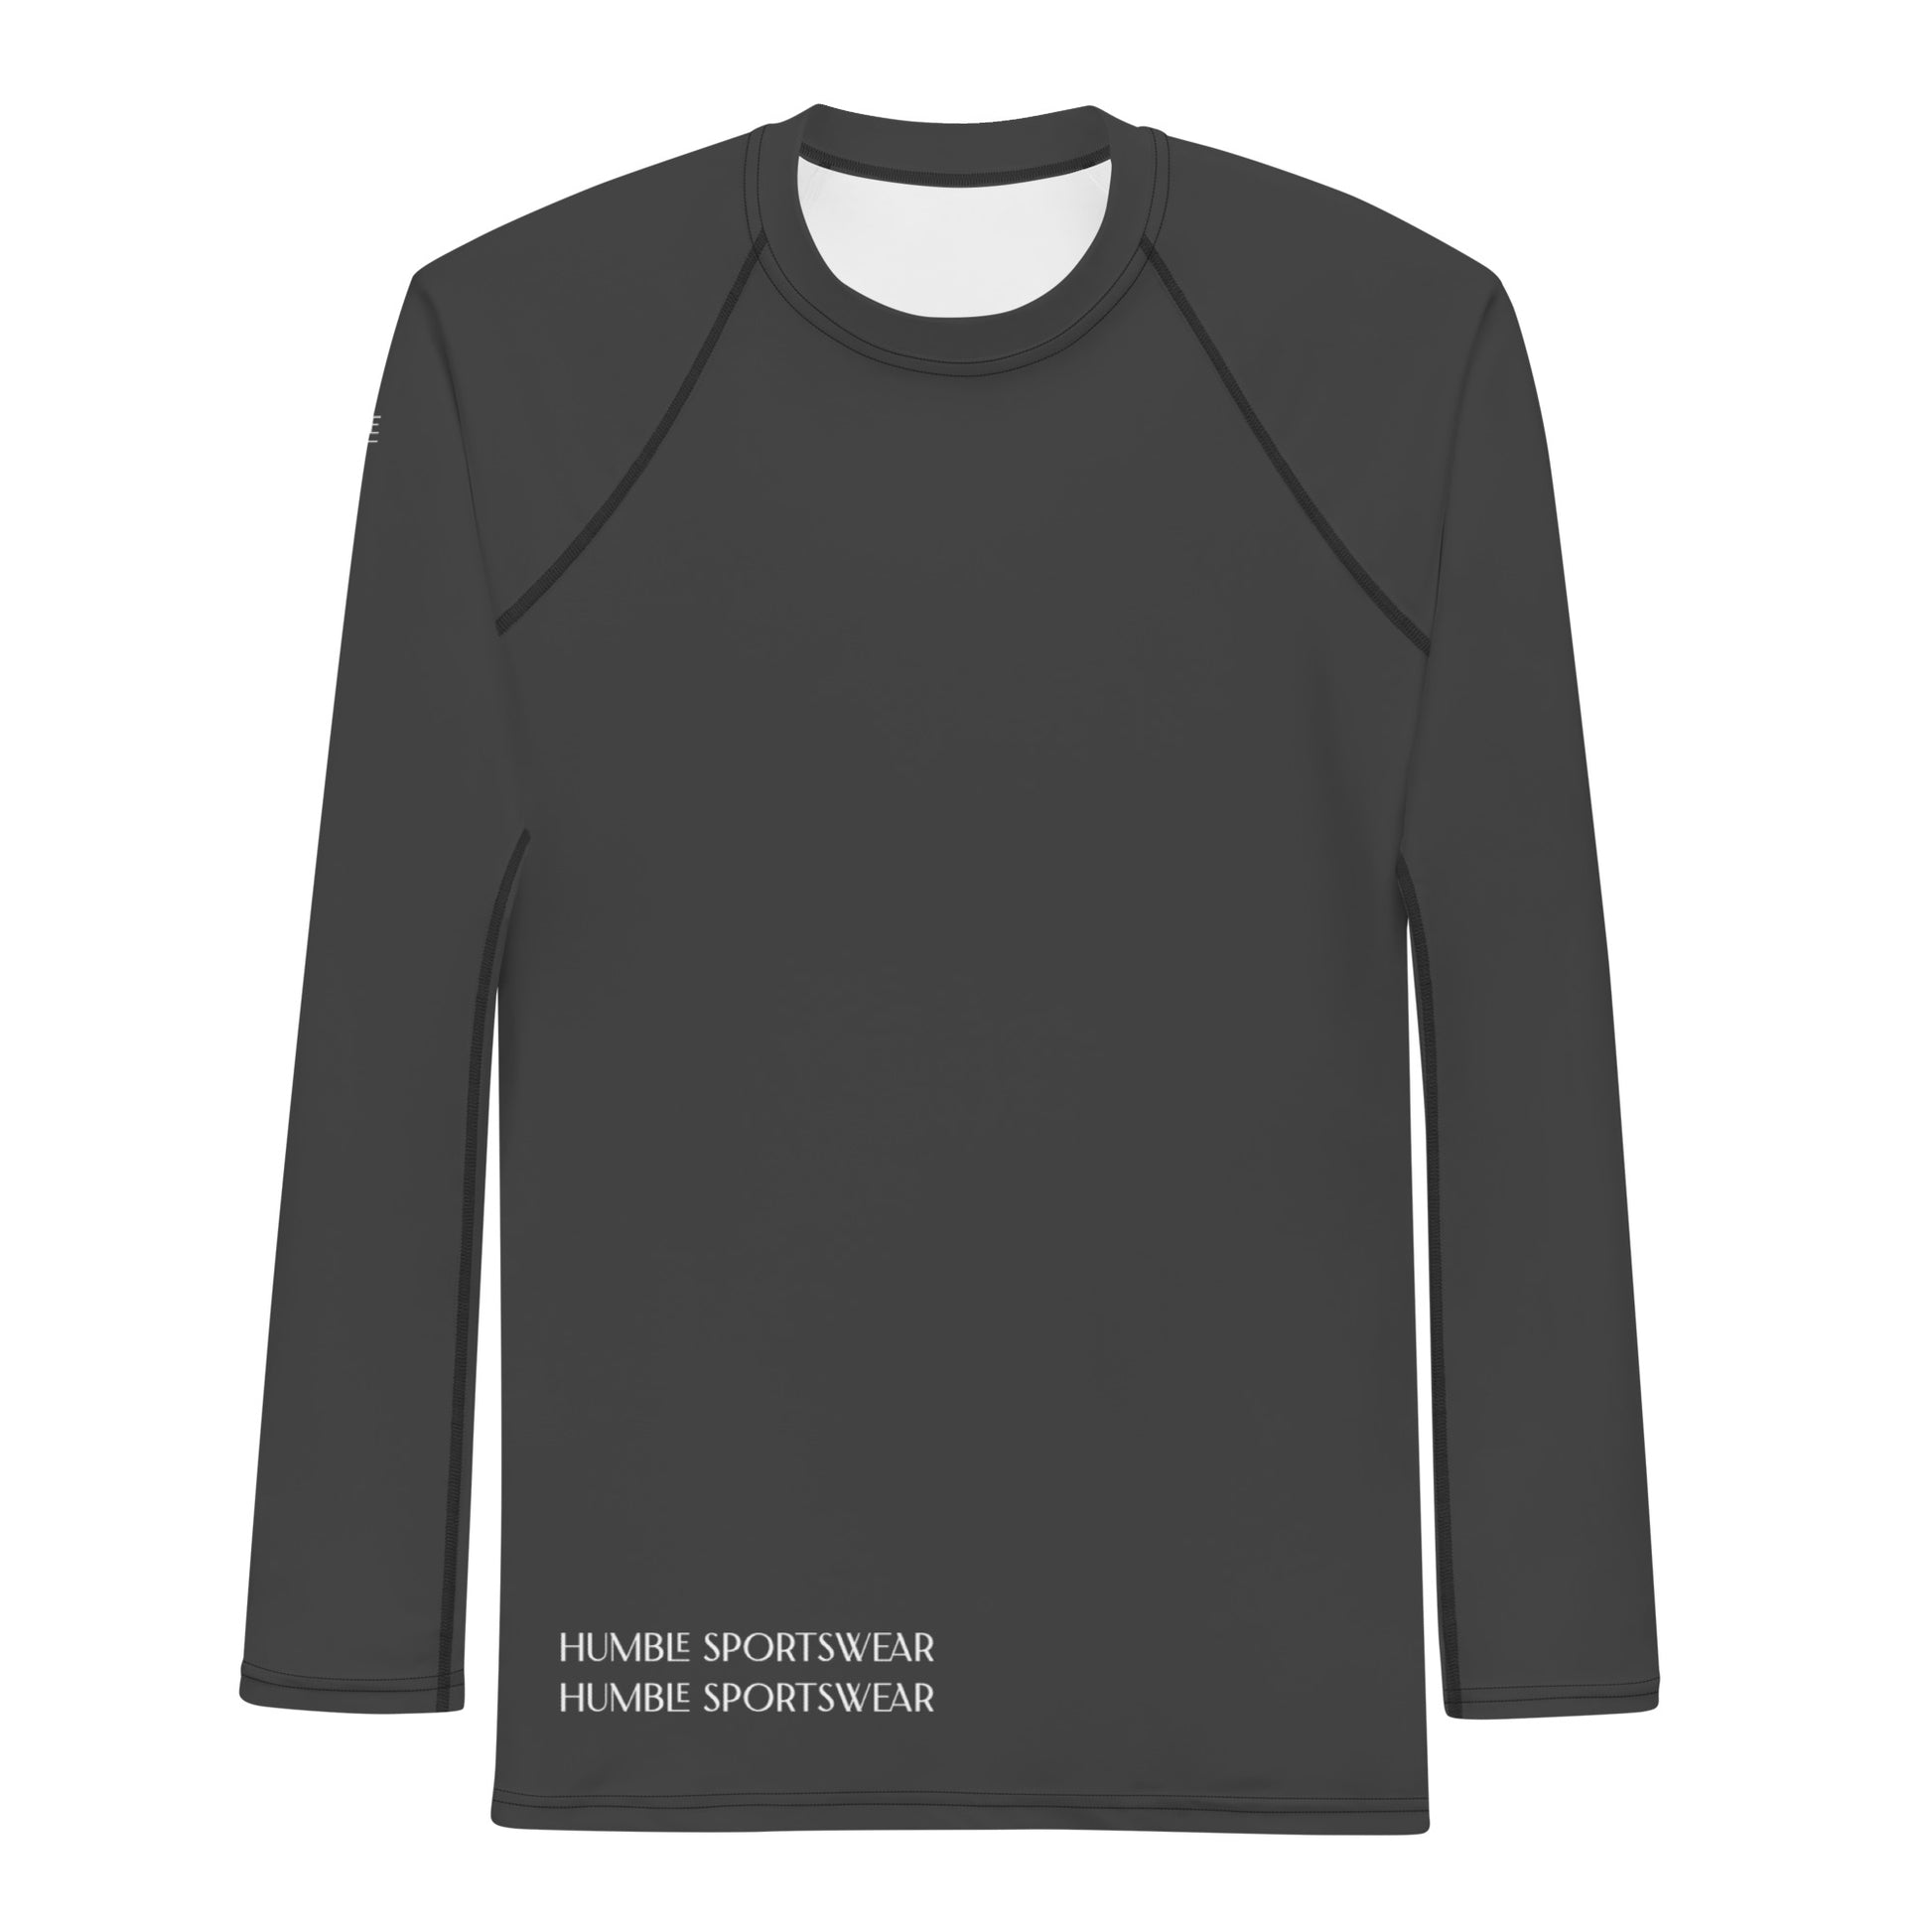 Humble Sportswear™ Men's Eclipse Grey Rash Guard - Mireille Fine Art